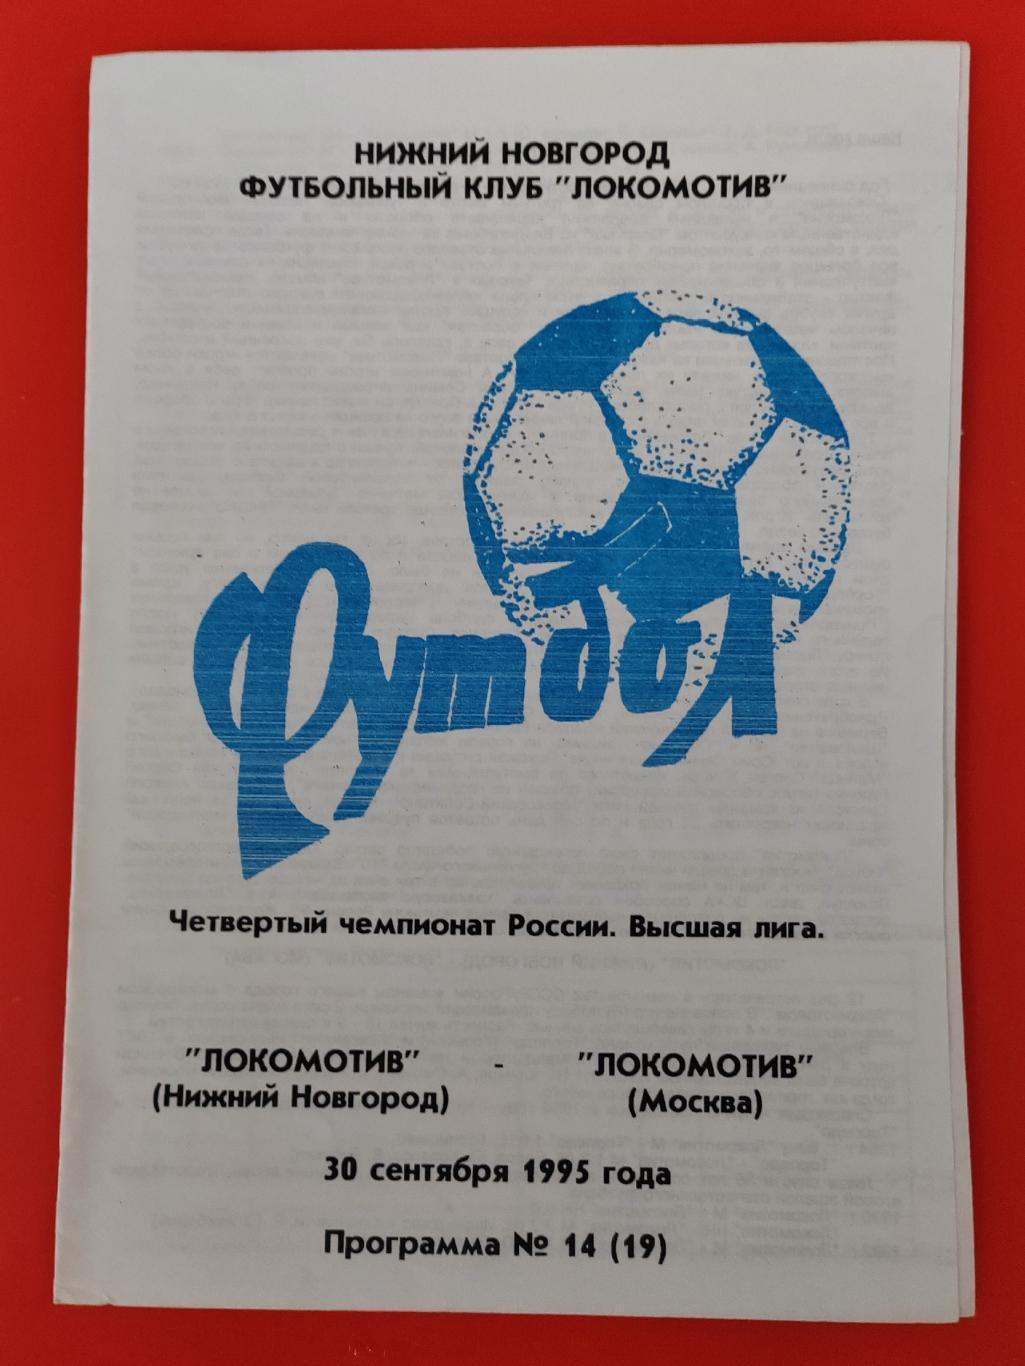 1995 Локомотив (Нижний Новгород) - Локомотив (Москва)